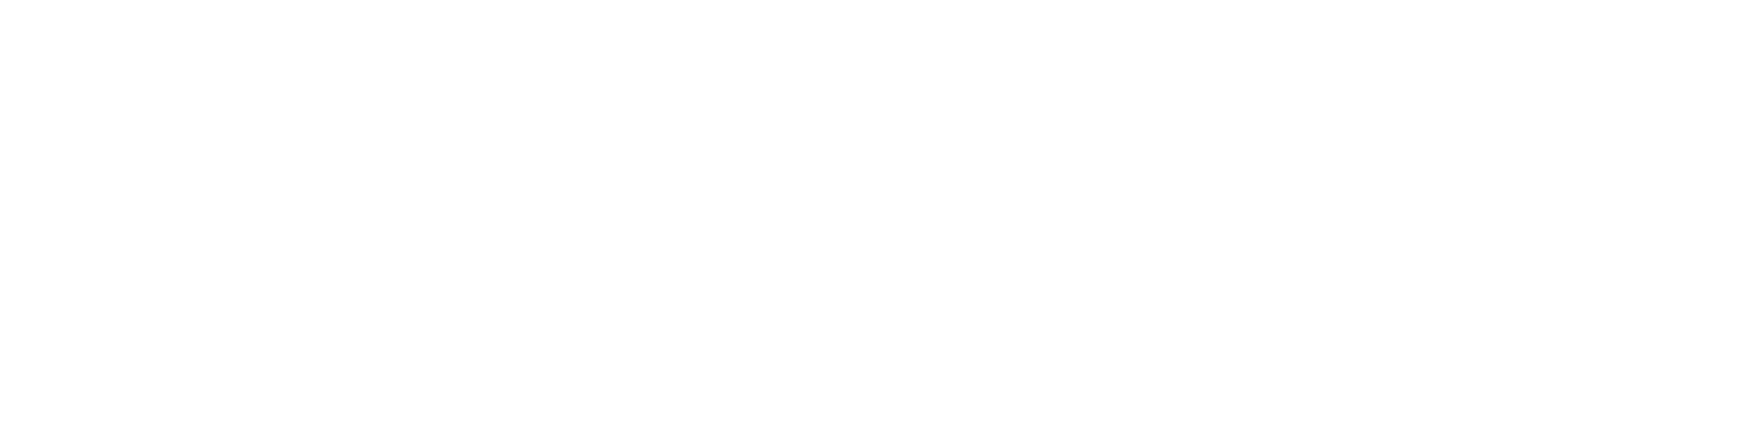 ASPCA Pet Health Insurance Vet Portal